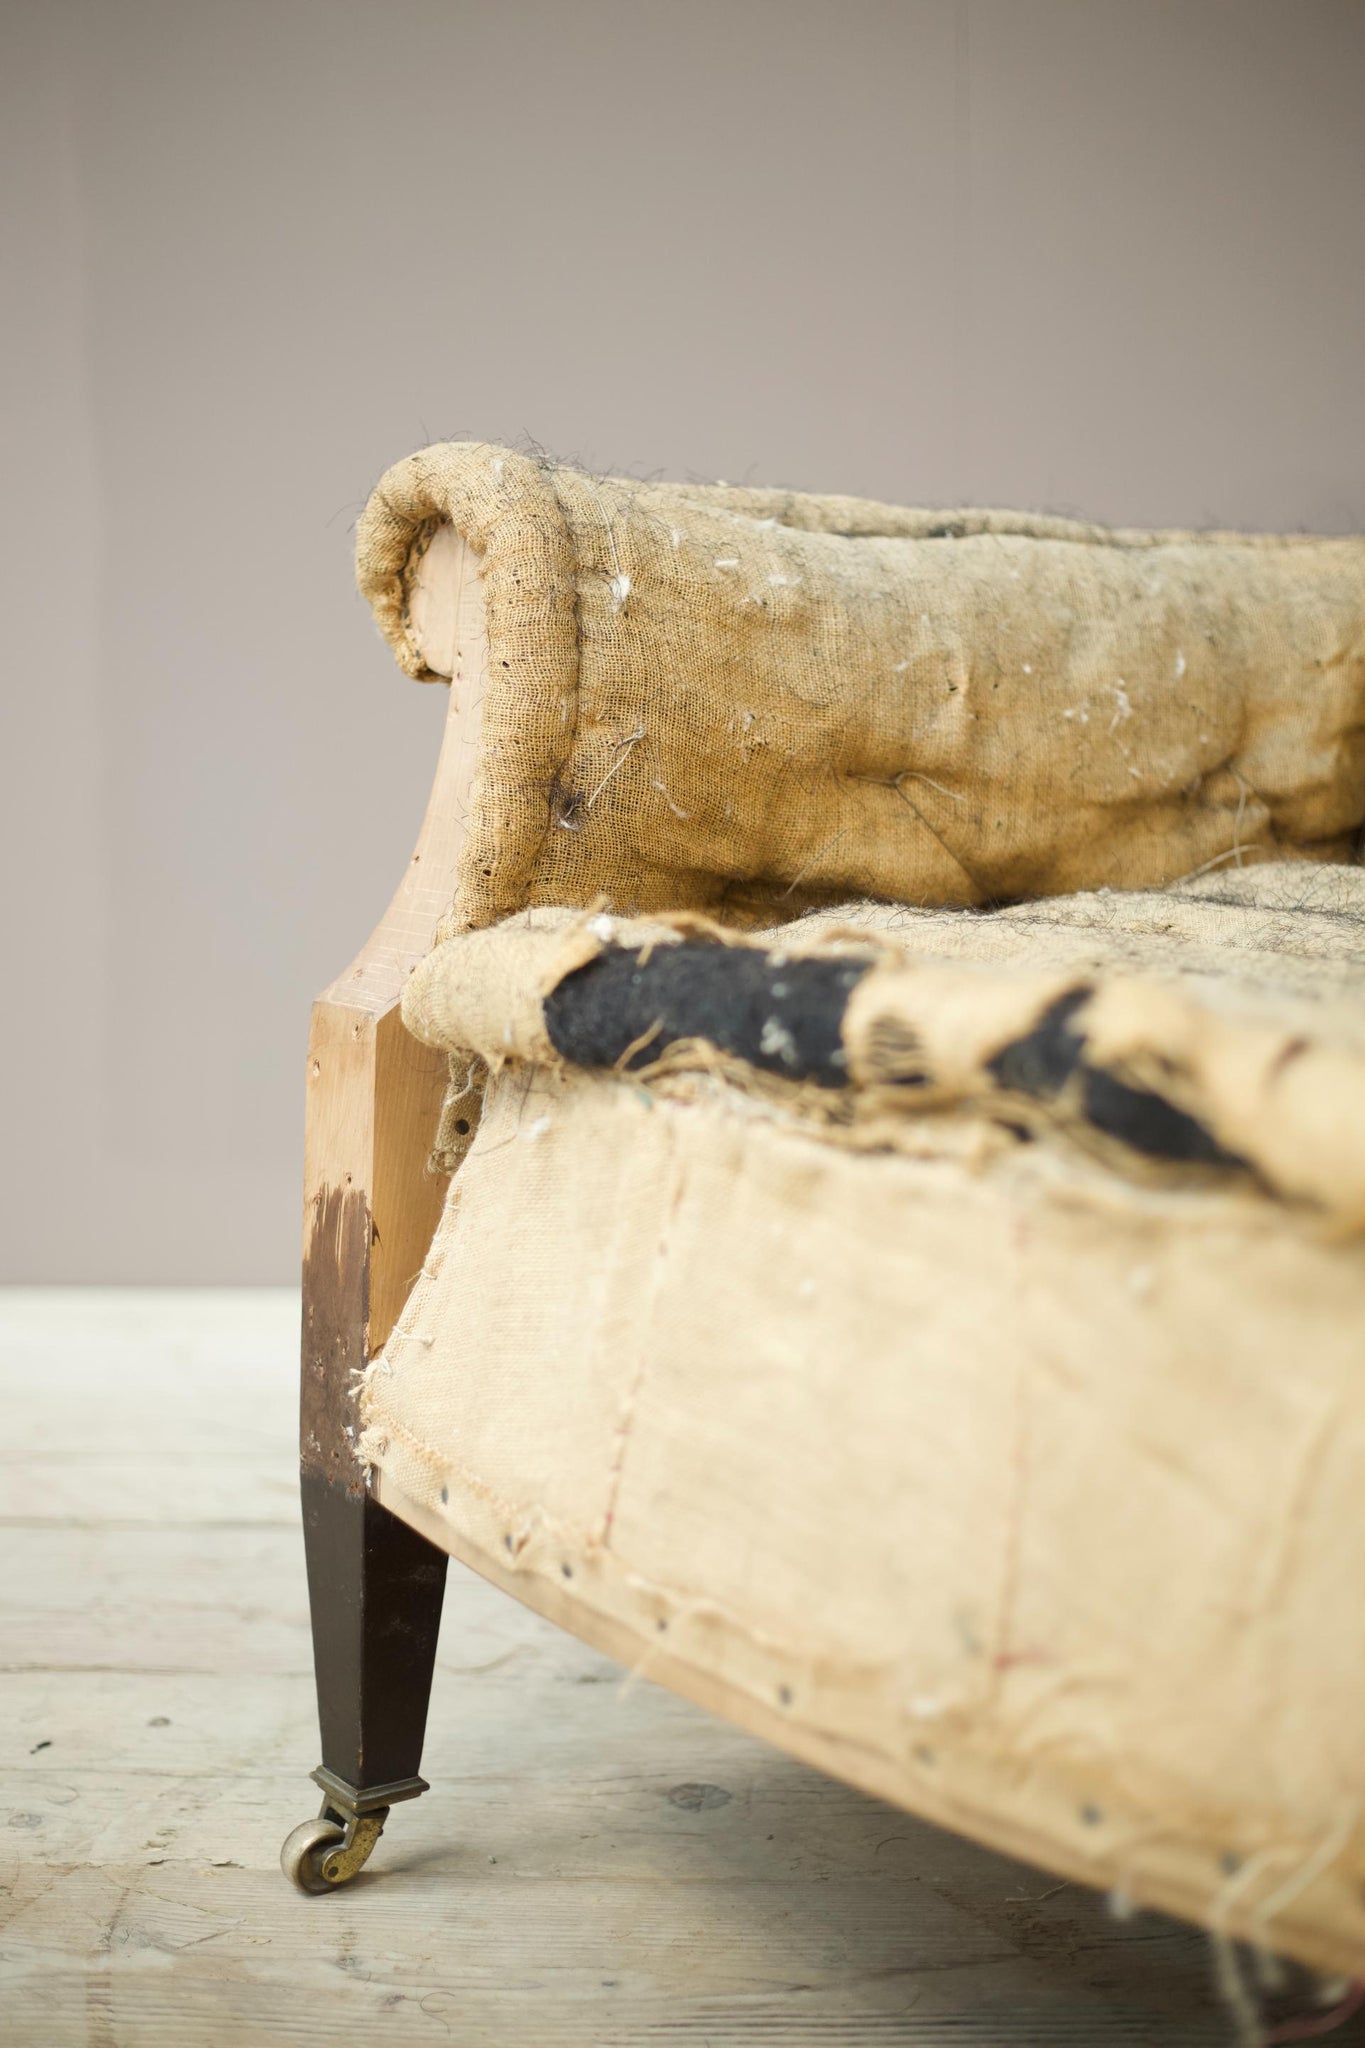 Antique Edwardian scroll back armchair